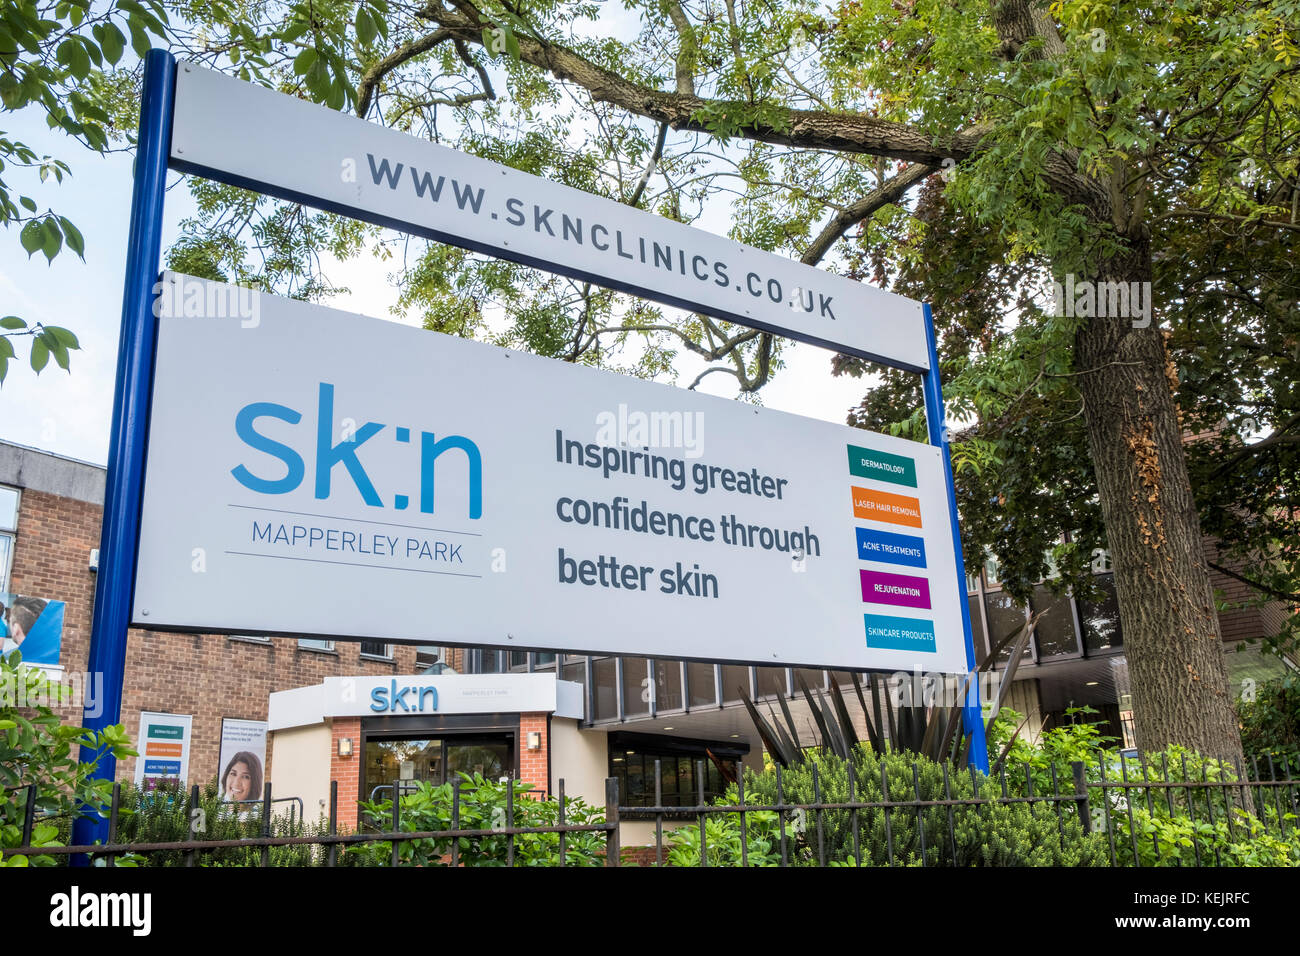 Sk:n, Sknclinics. Skin clinic, Nottingham, England, UK Stock Photo